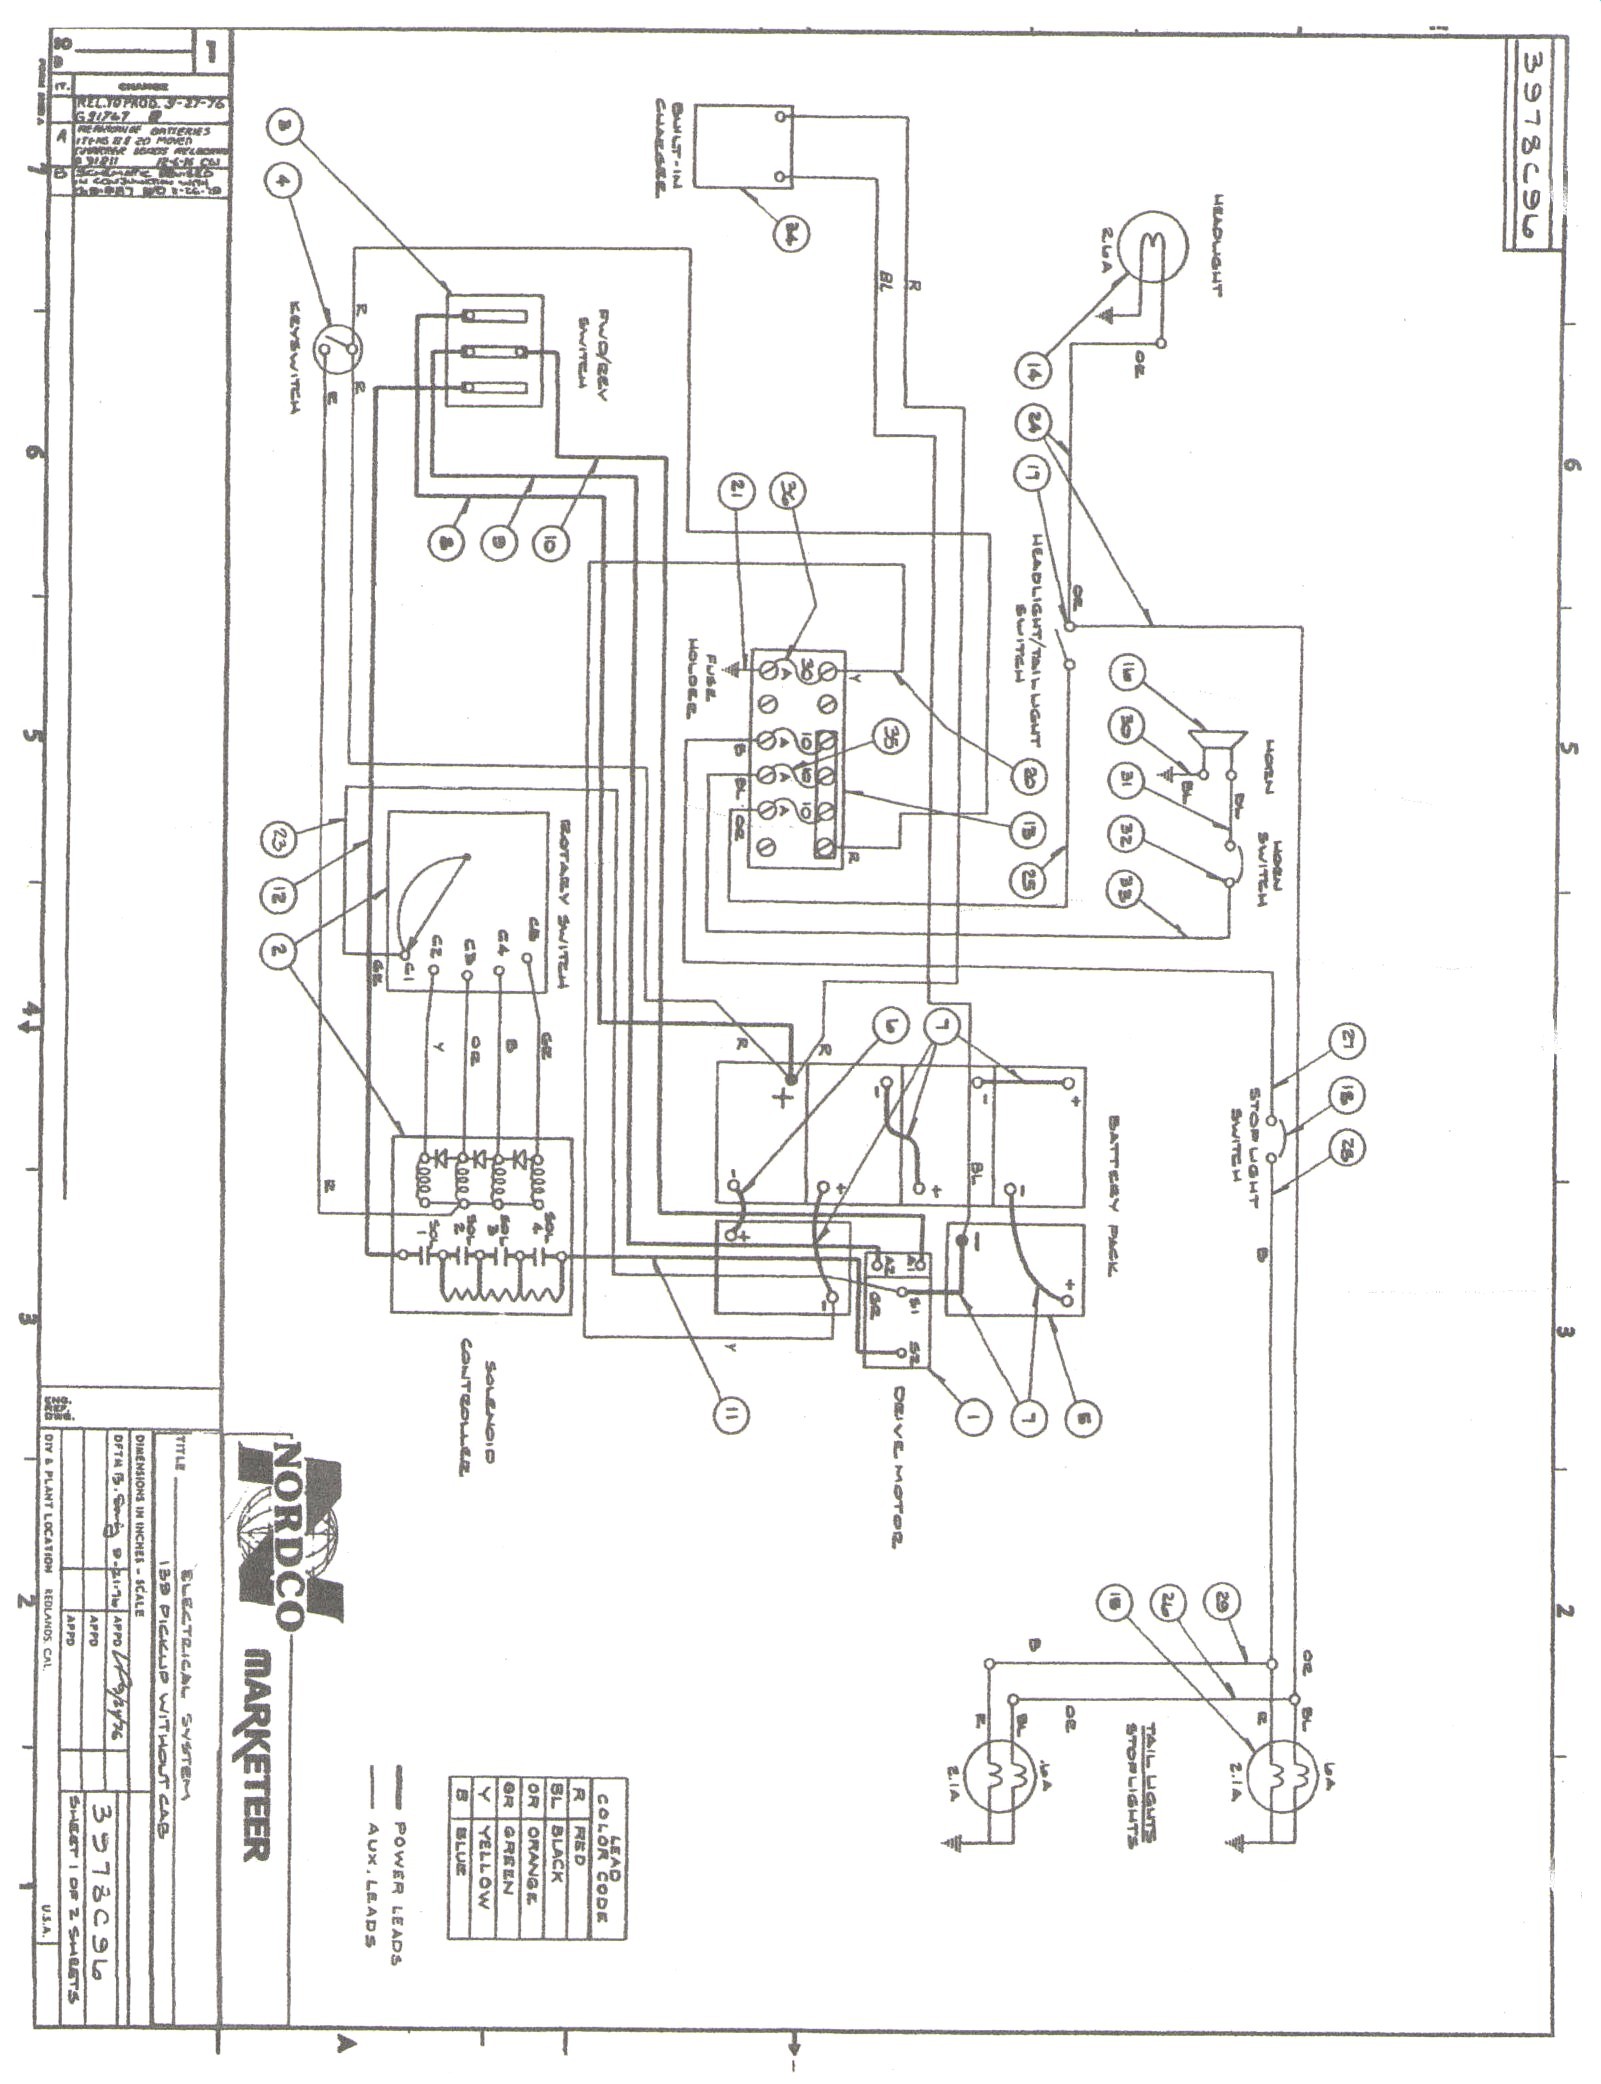 1996 ezgo electric golf cart wiring diagram automotive wiring rh nfluencer co 2006 ezgo txt pds